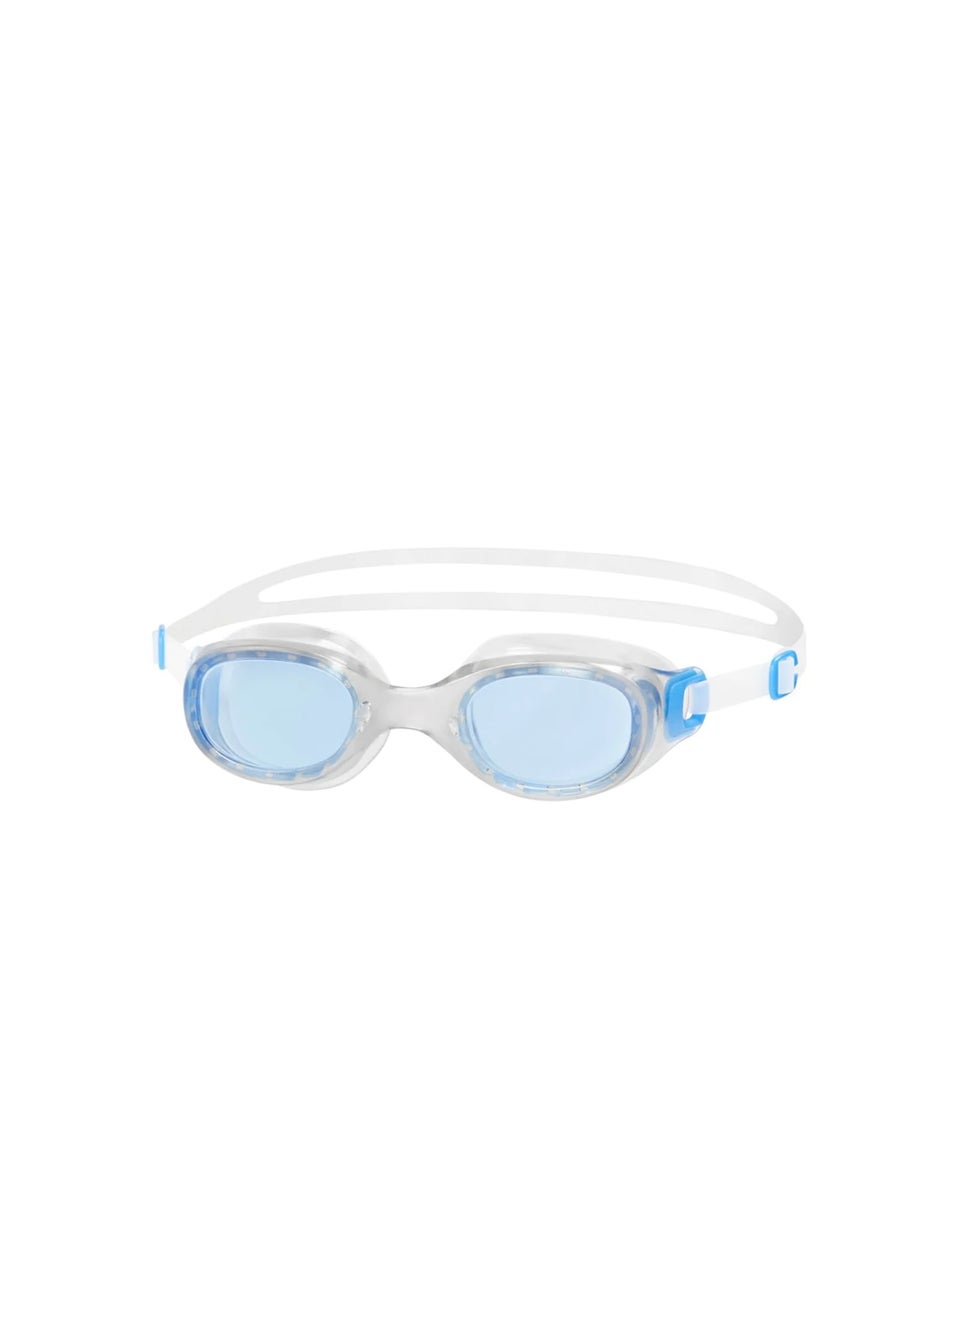 Speedo Kids Clear Futura Classic Swimming Goggles